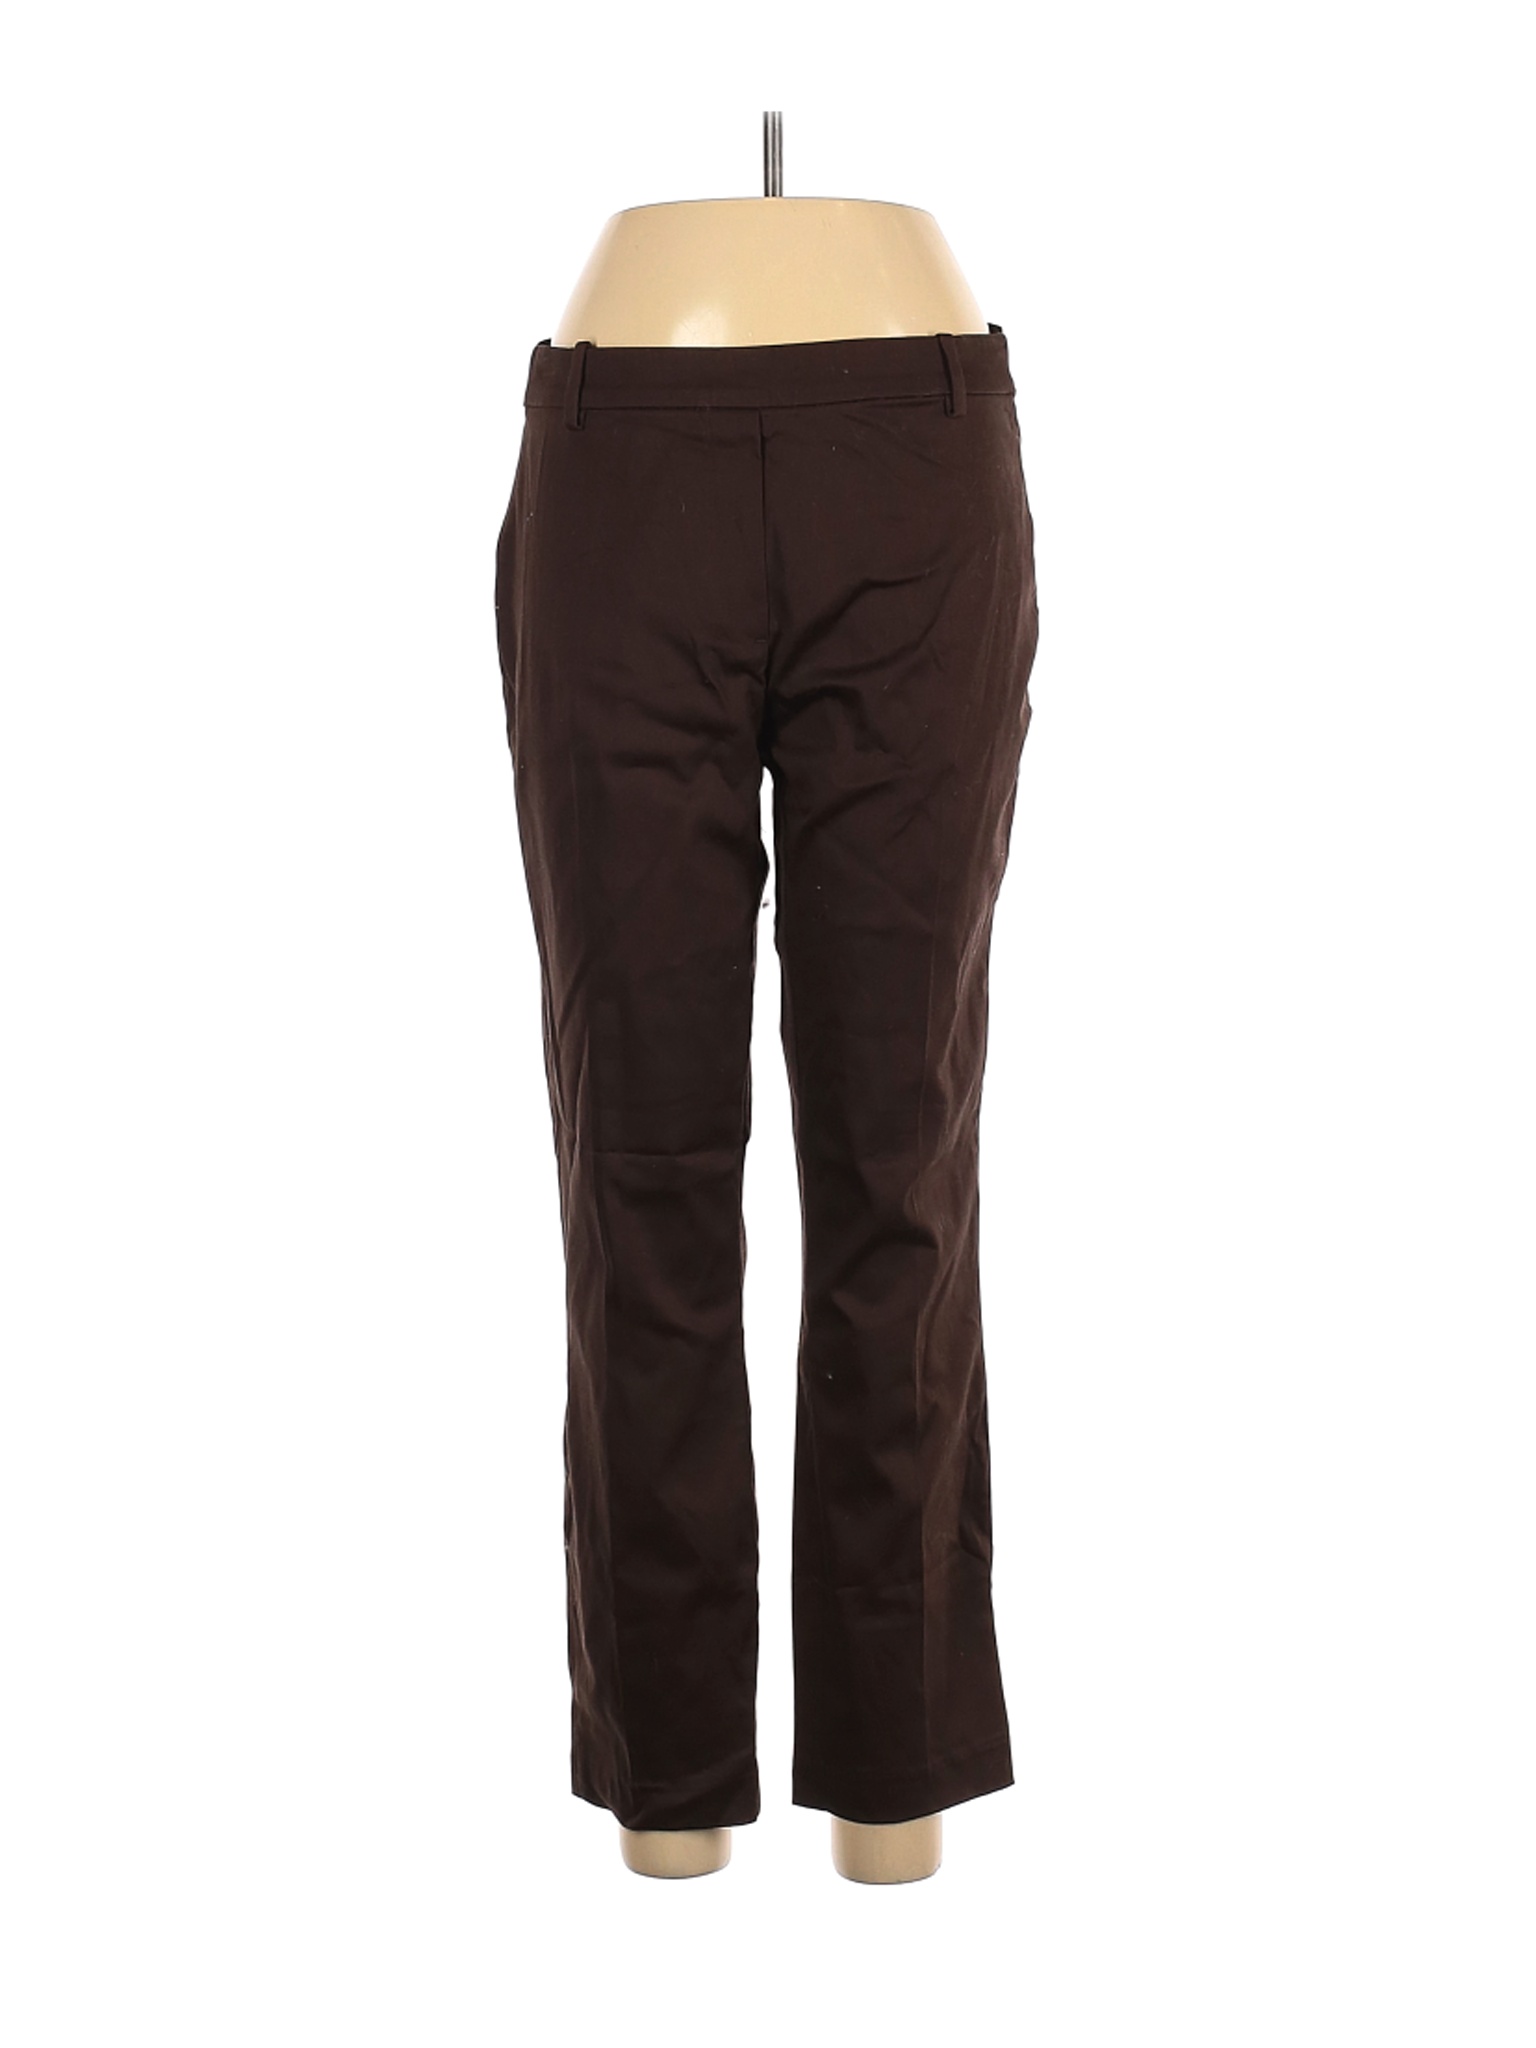 NWT H&M Women Brown Casual Pants 12 | eBay